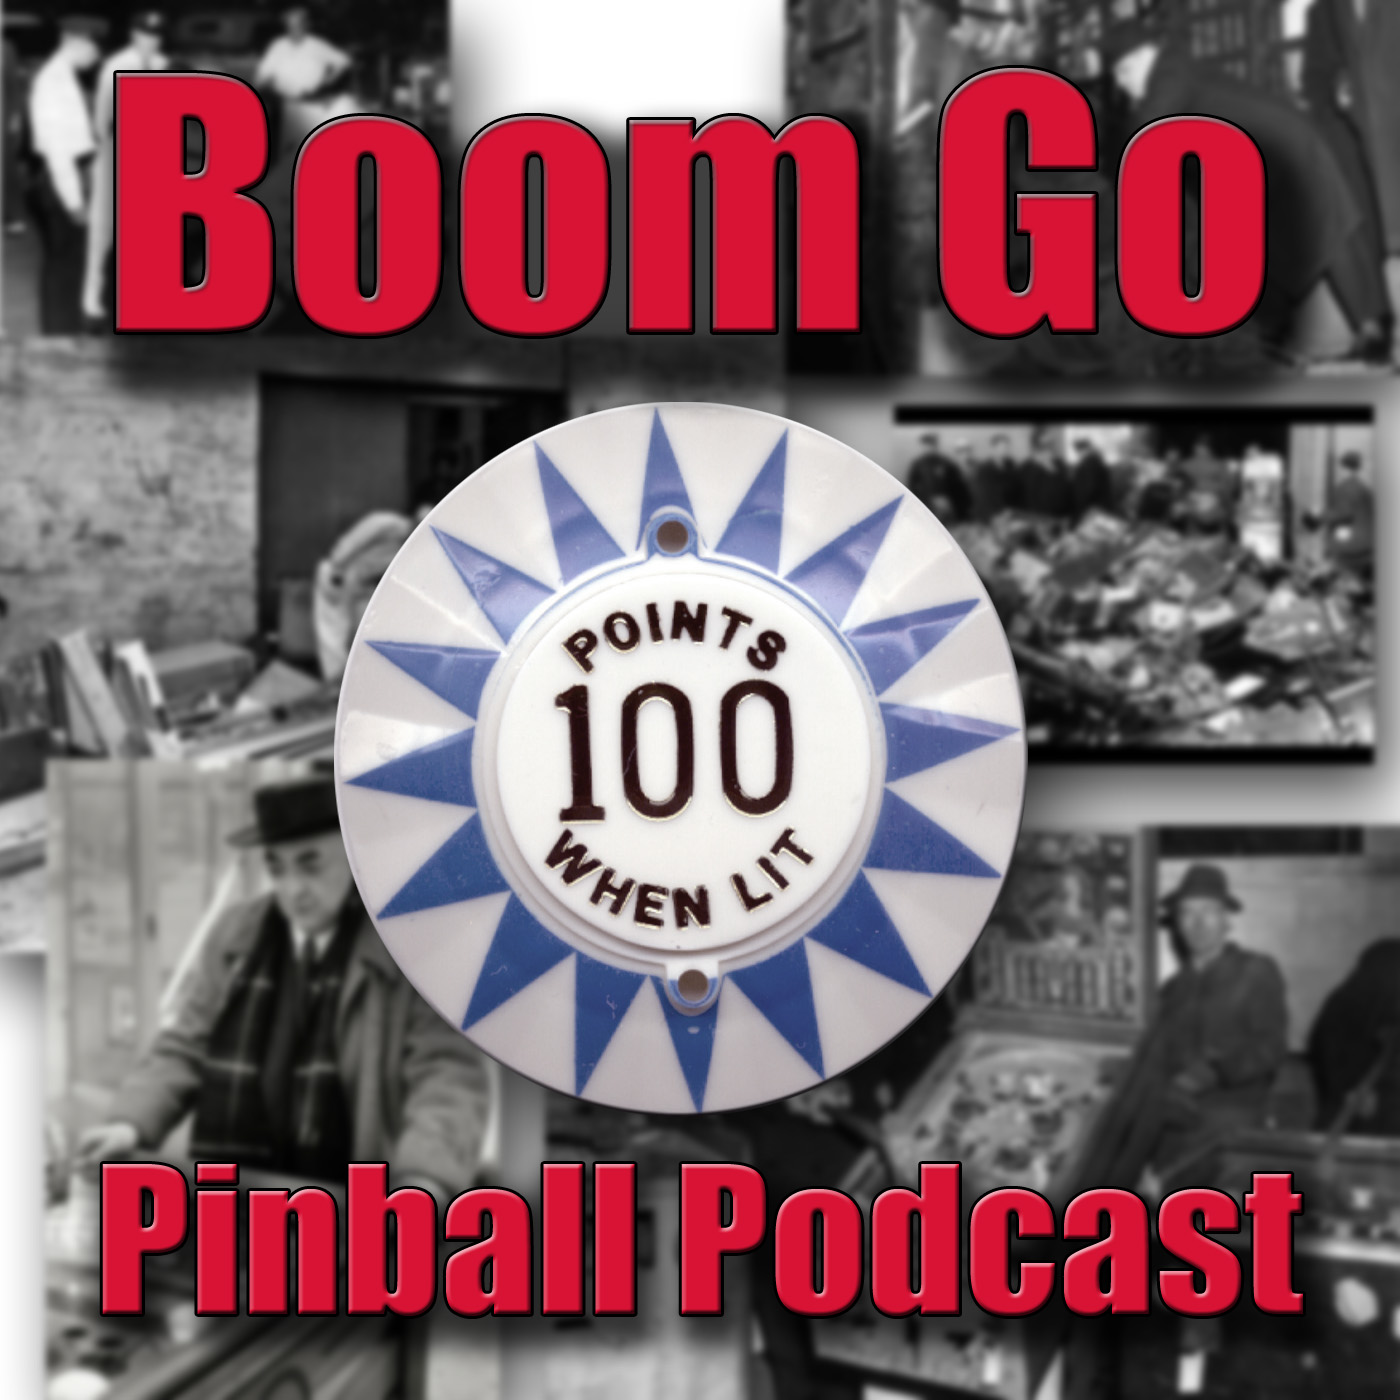 The Boom Go Pinball Podcast